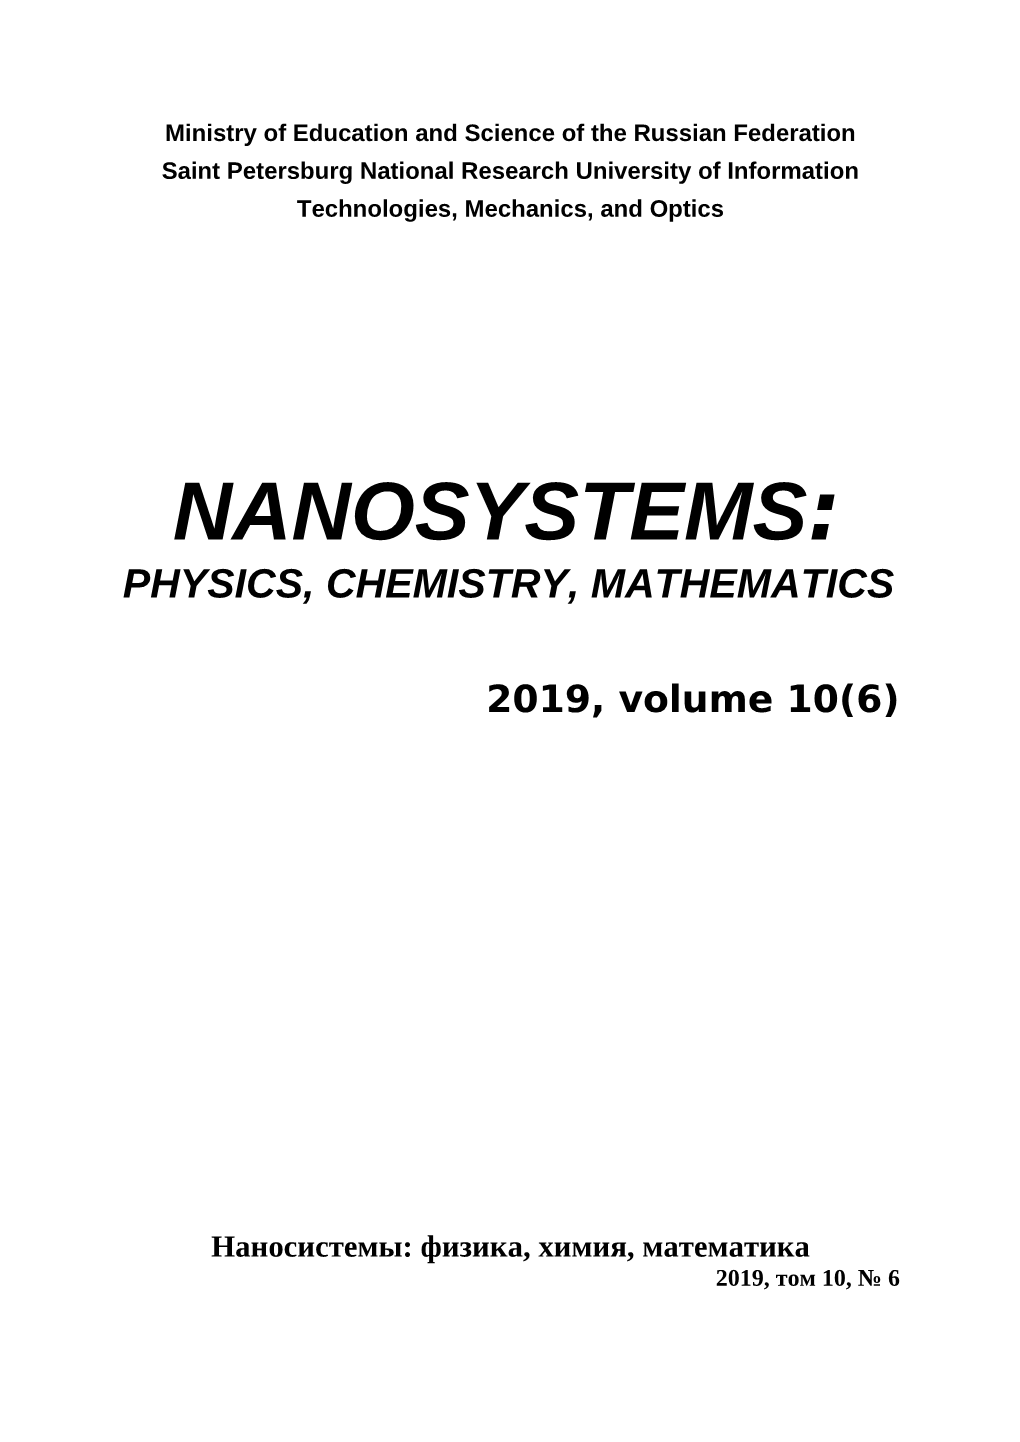 Nanosystems: Physics, Chemistry, Mathematics